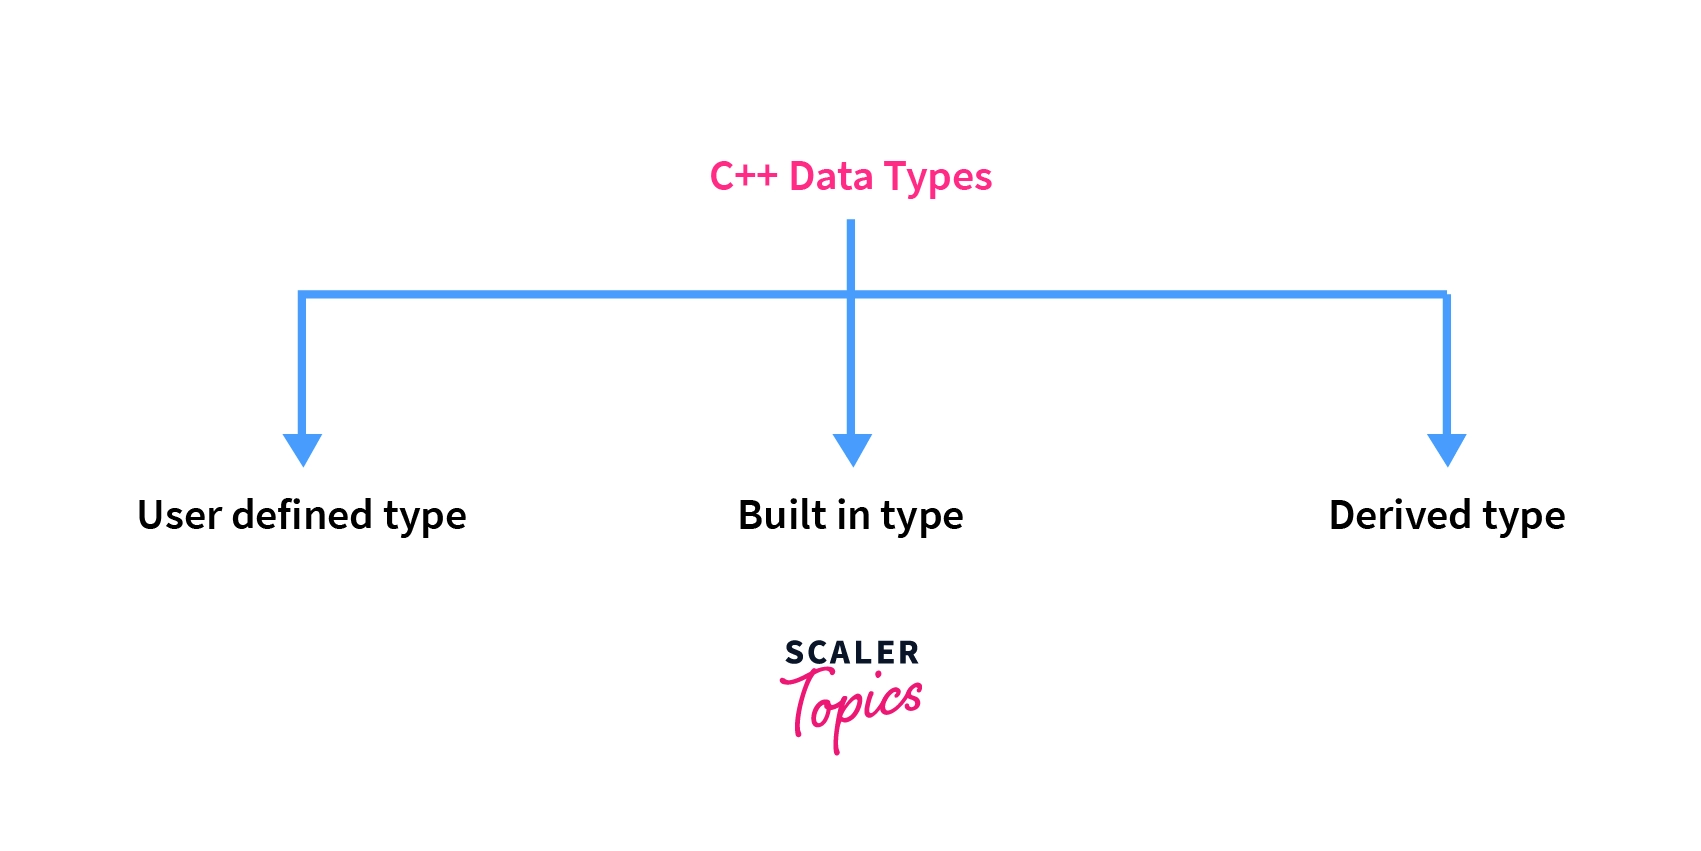 C ++ data types